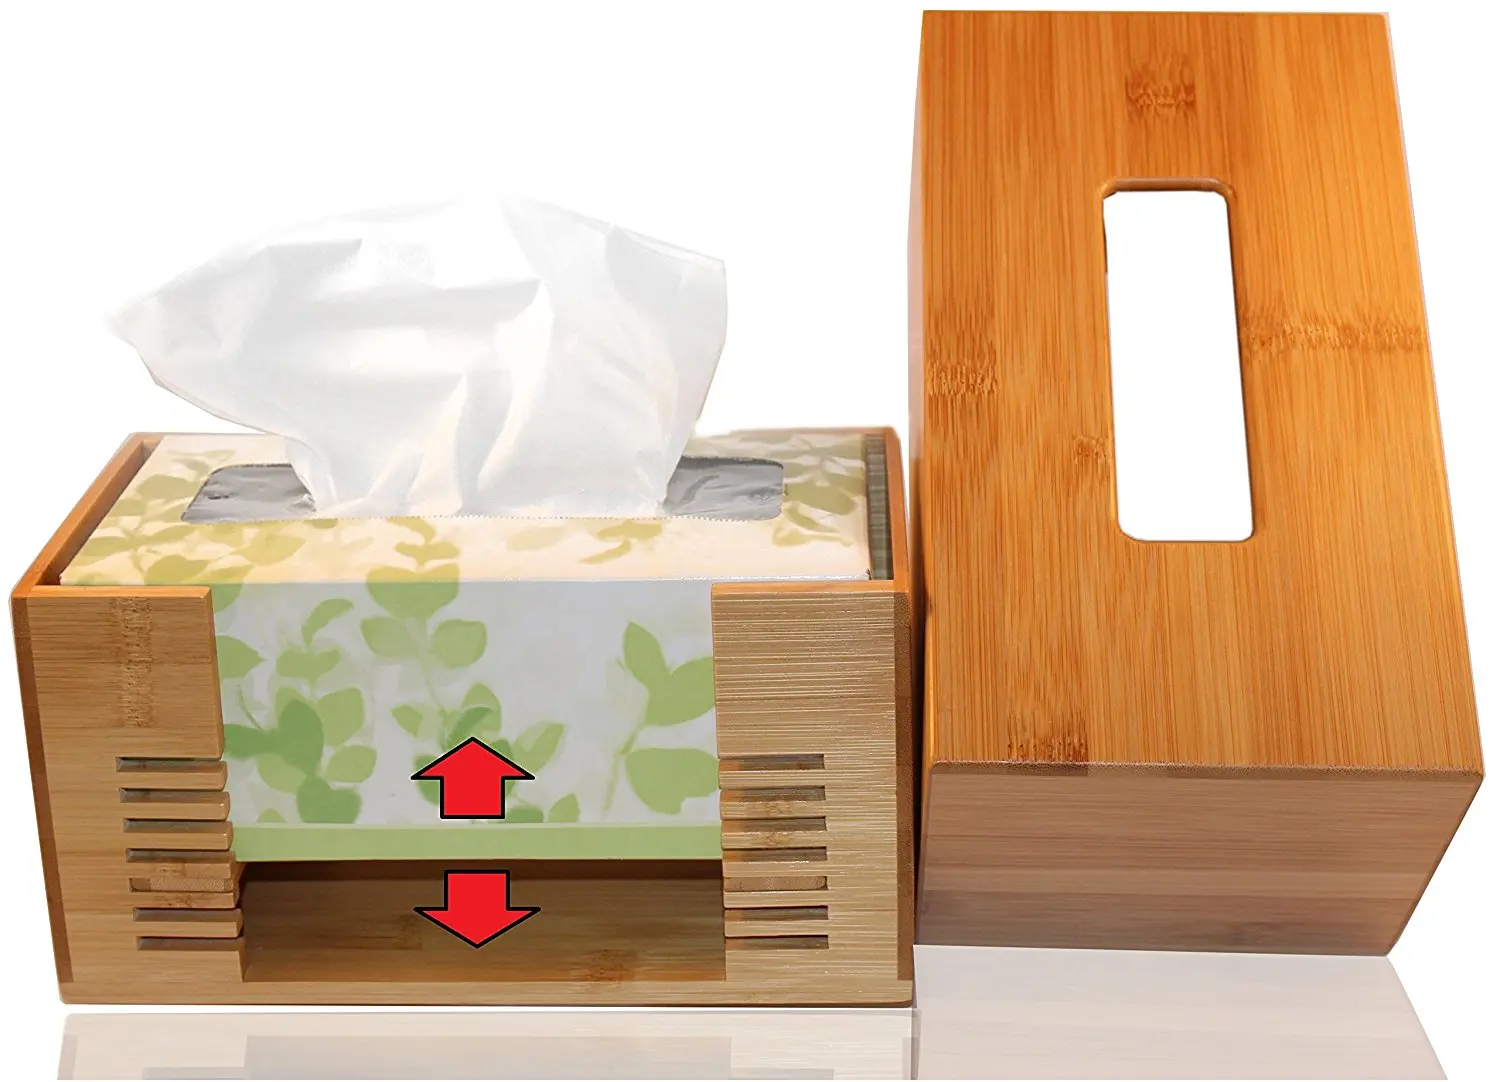 tissue box cover size